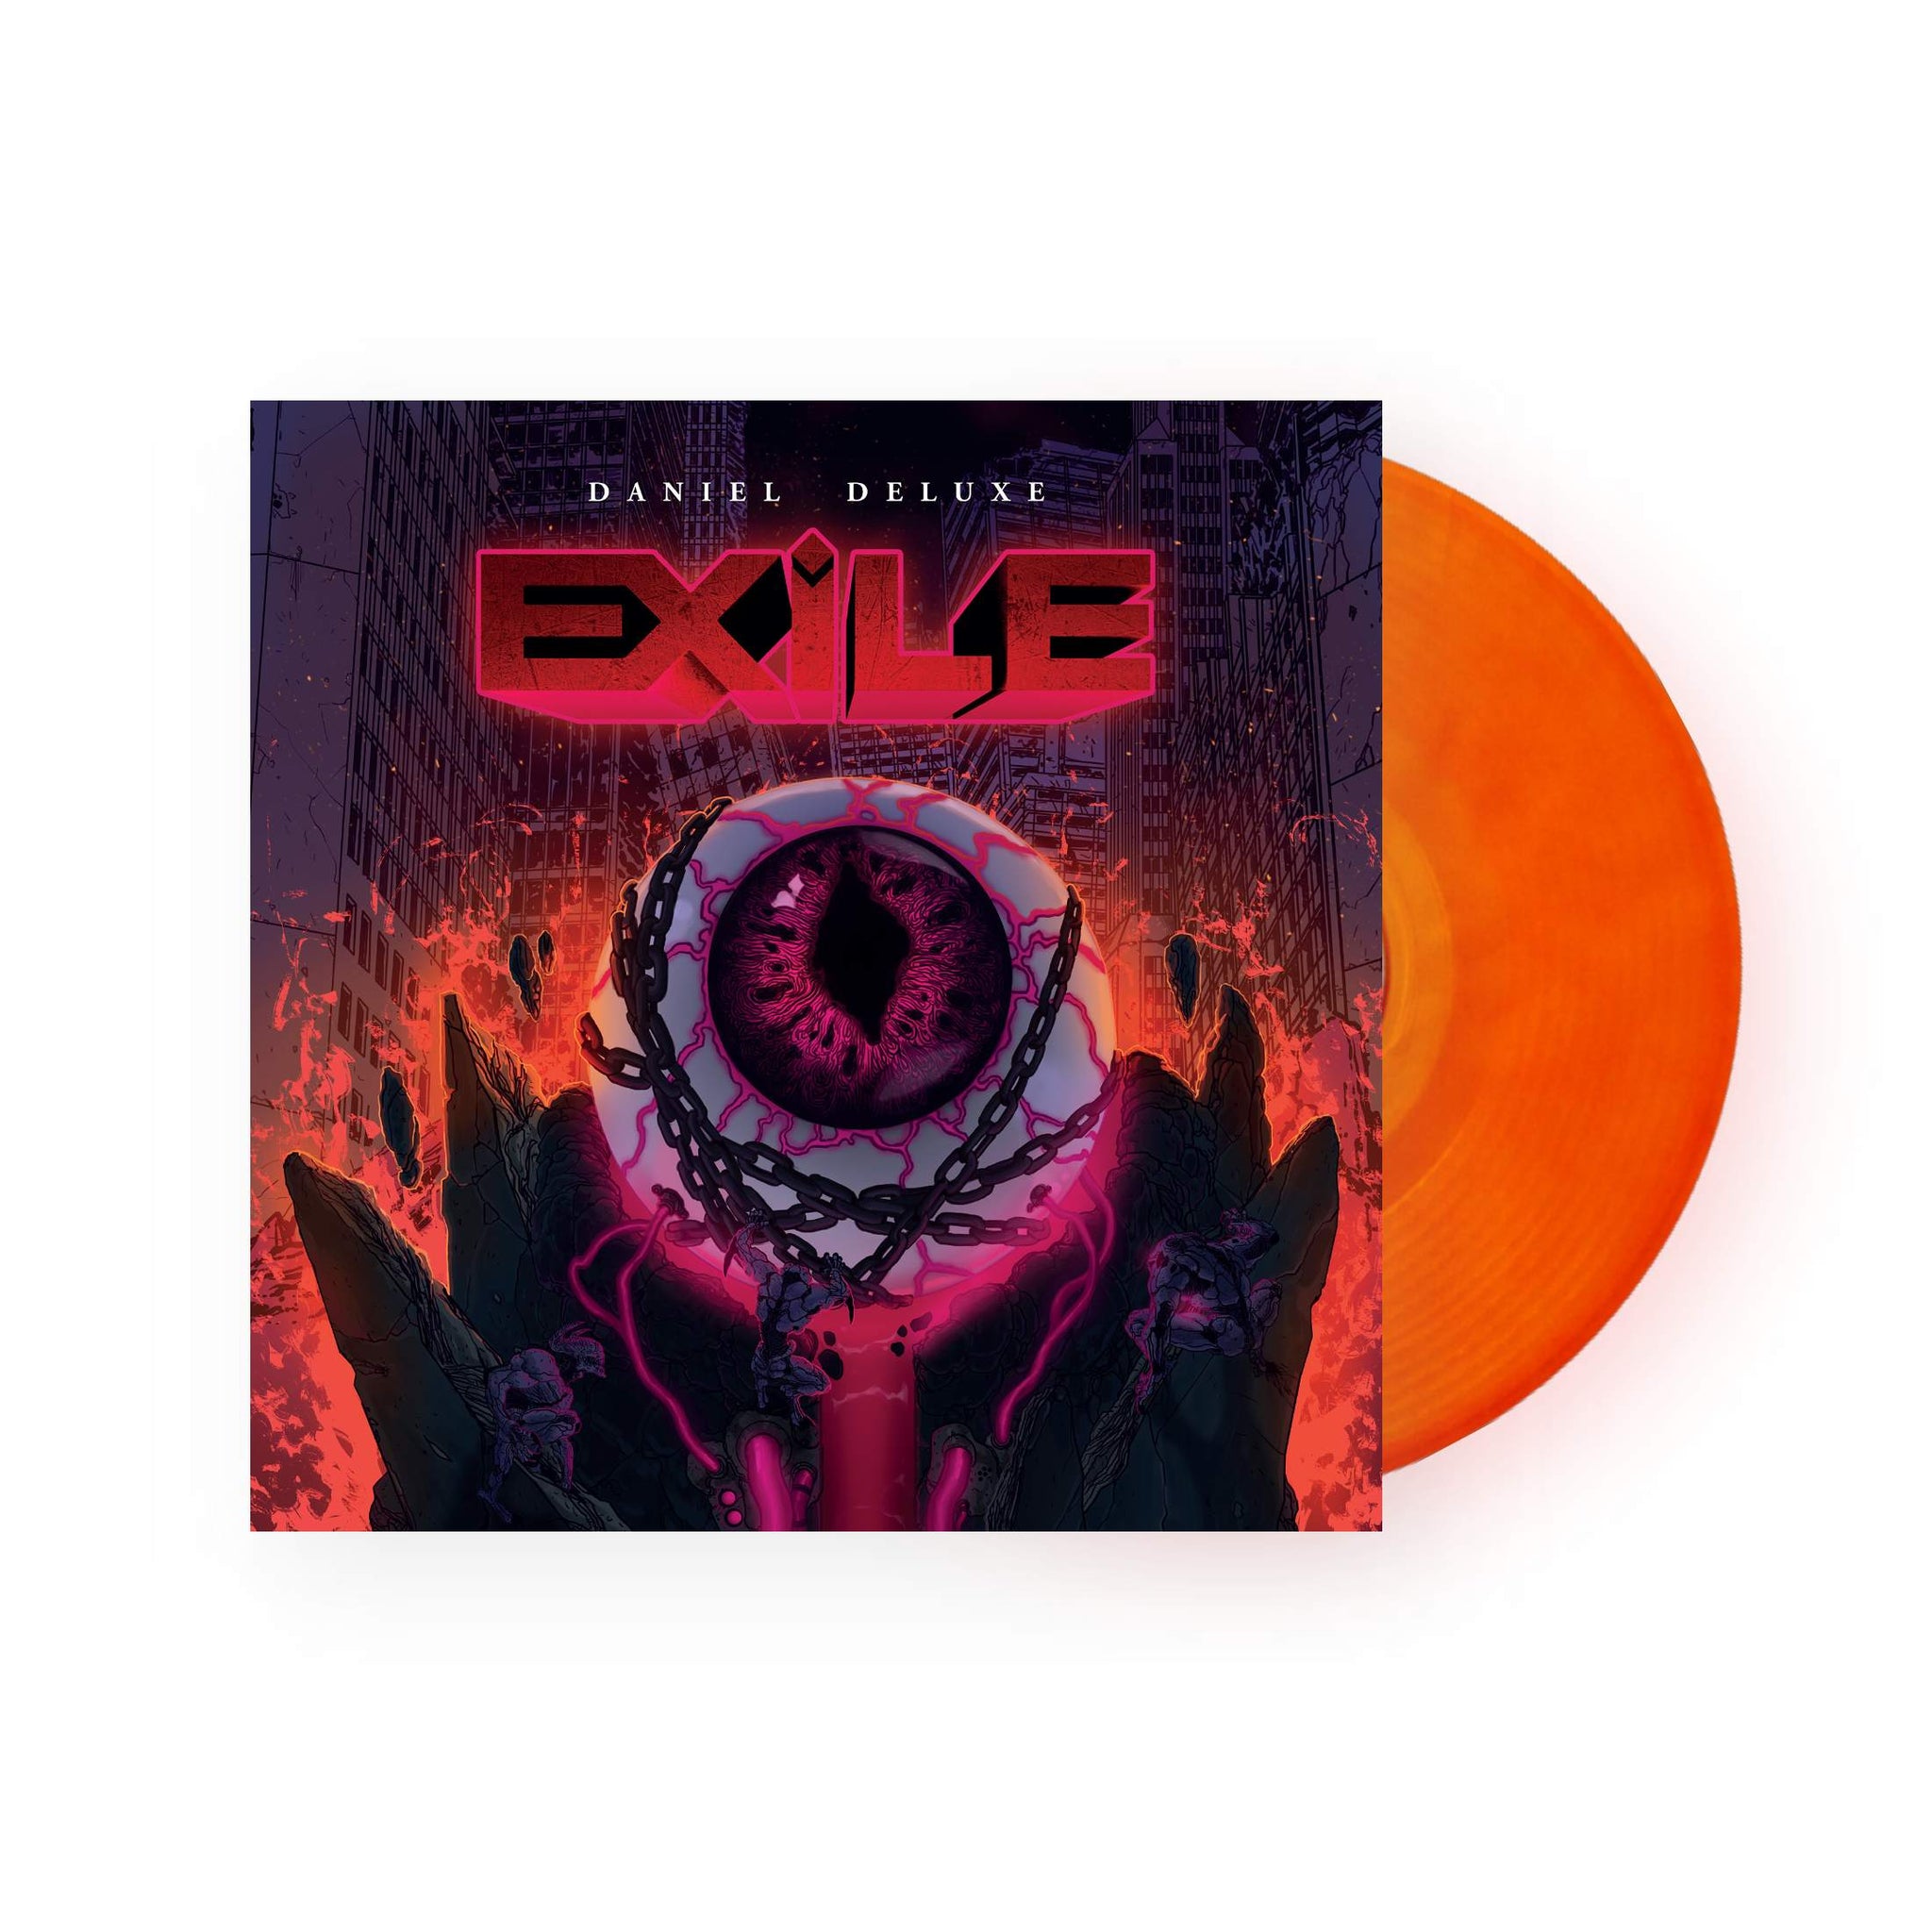 Daniel Deluxe - Exile  LP (Orange Vinyl)